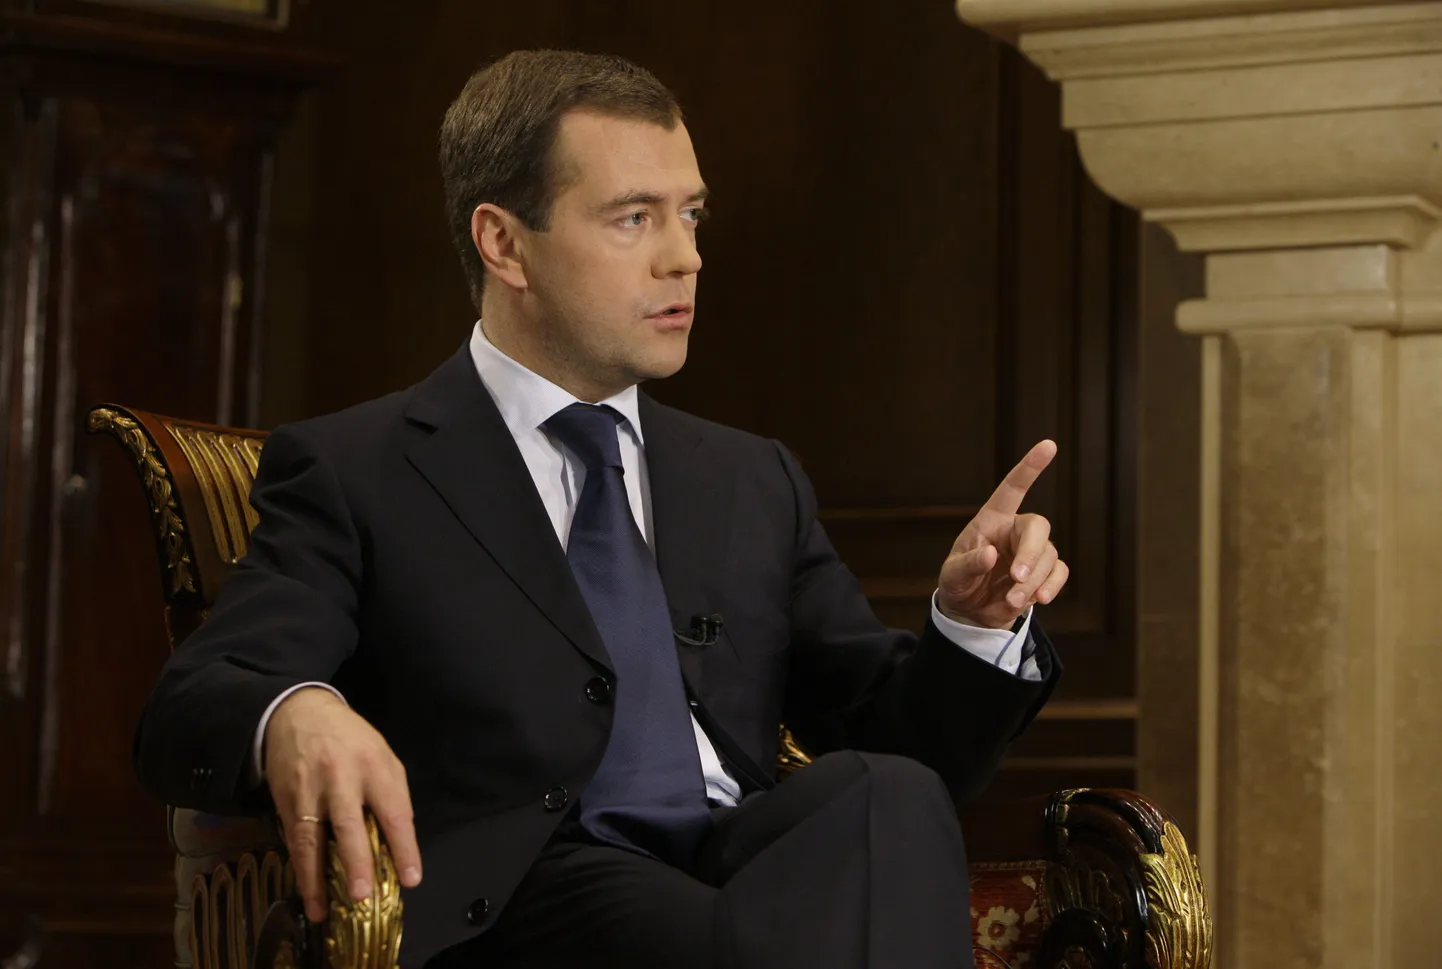 Dmitri Medvedev annab intervjuus Hiina telekanalile CCTV (China Central Television)